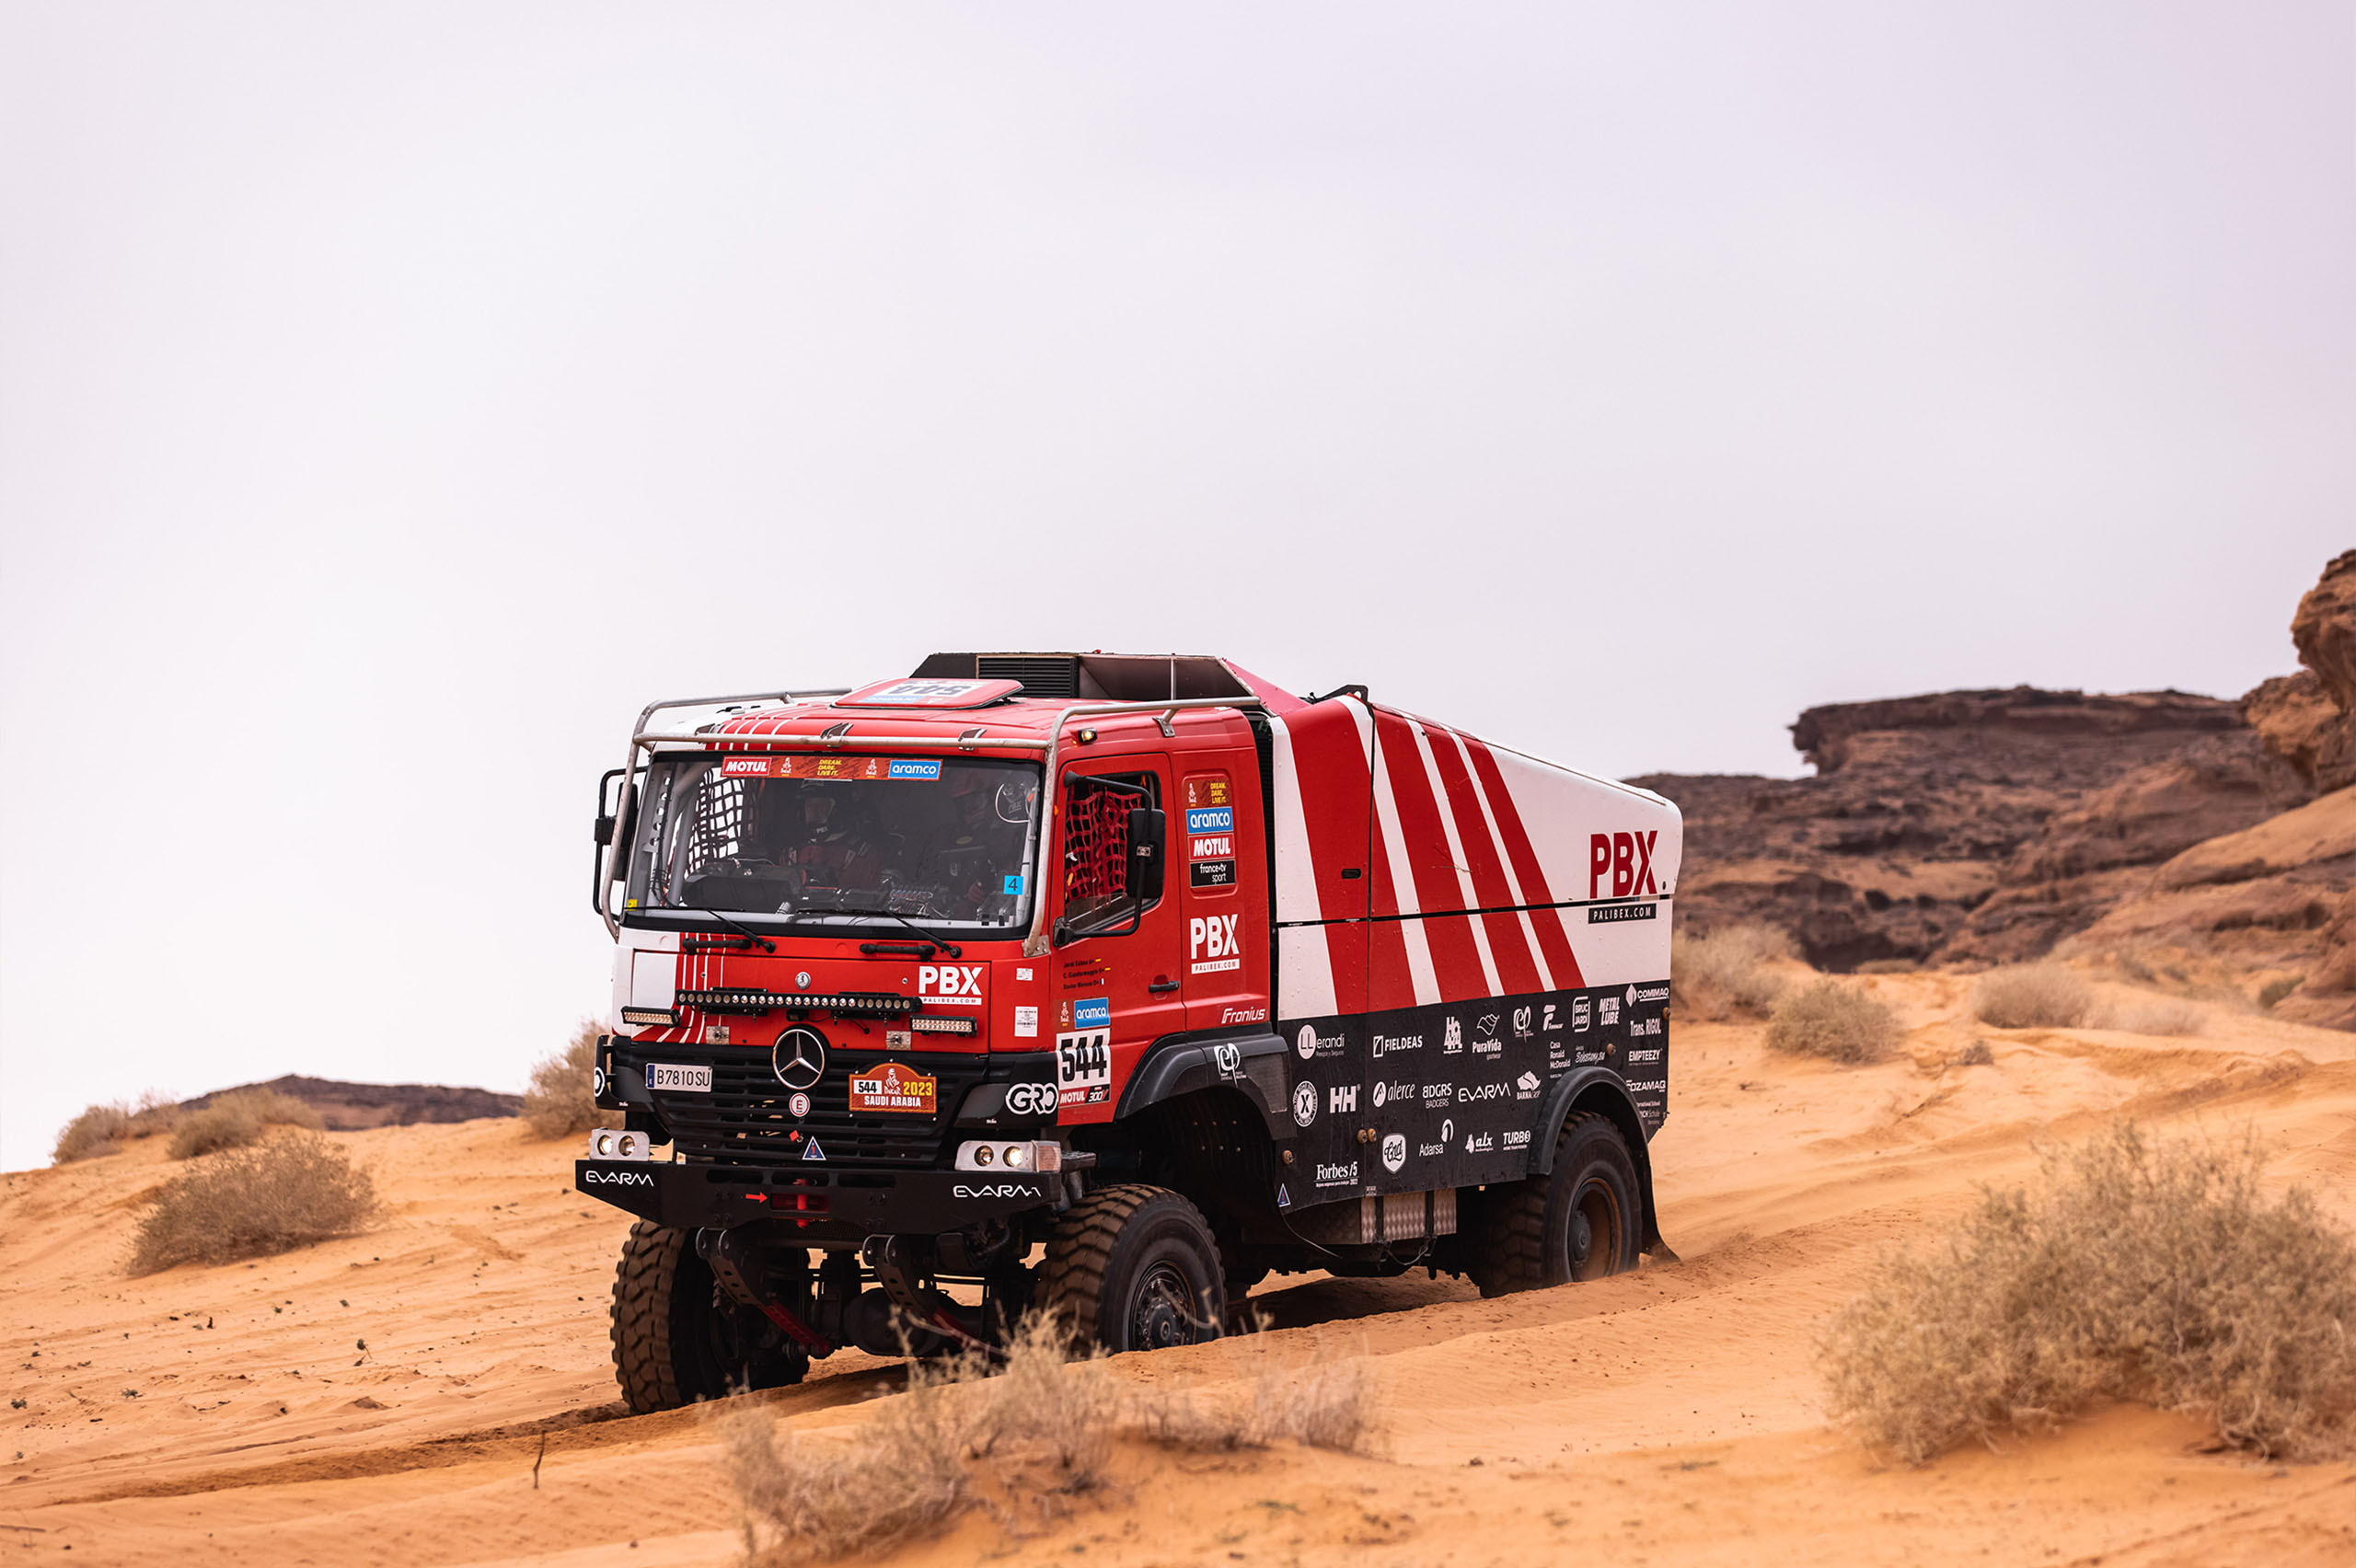 Navegacion en el dakar - camion dakar - camion dunas desierto - pbx dakar team - palibex